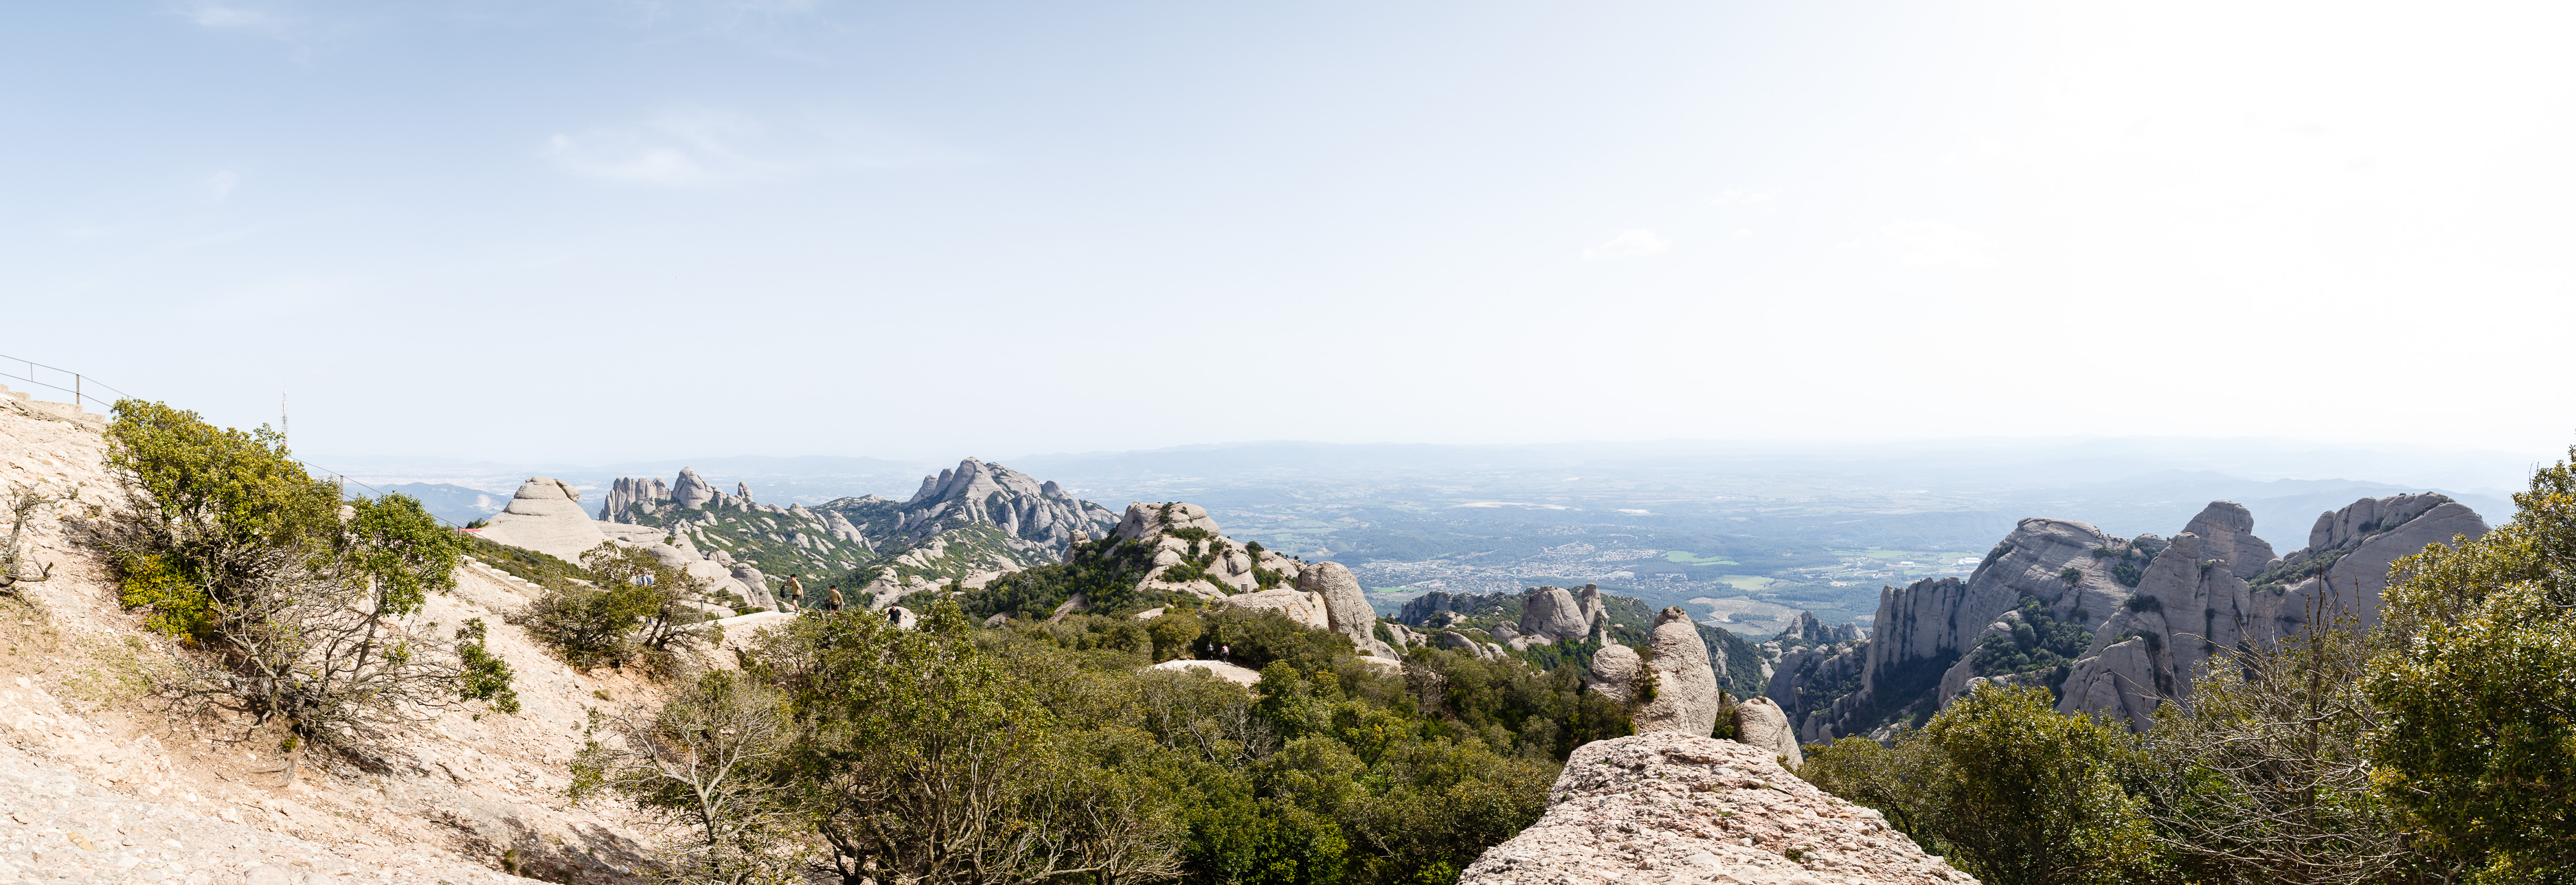 Montserrat | Gebirgskette in der Provinz Barcelona